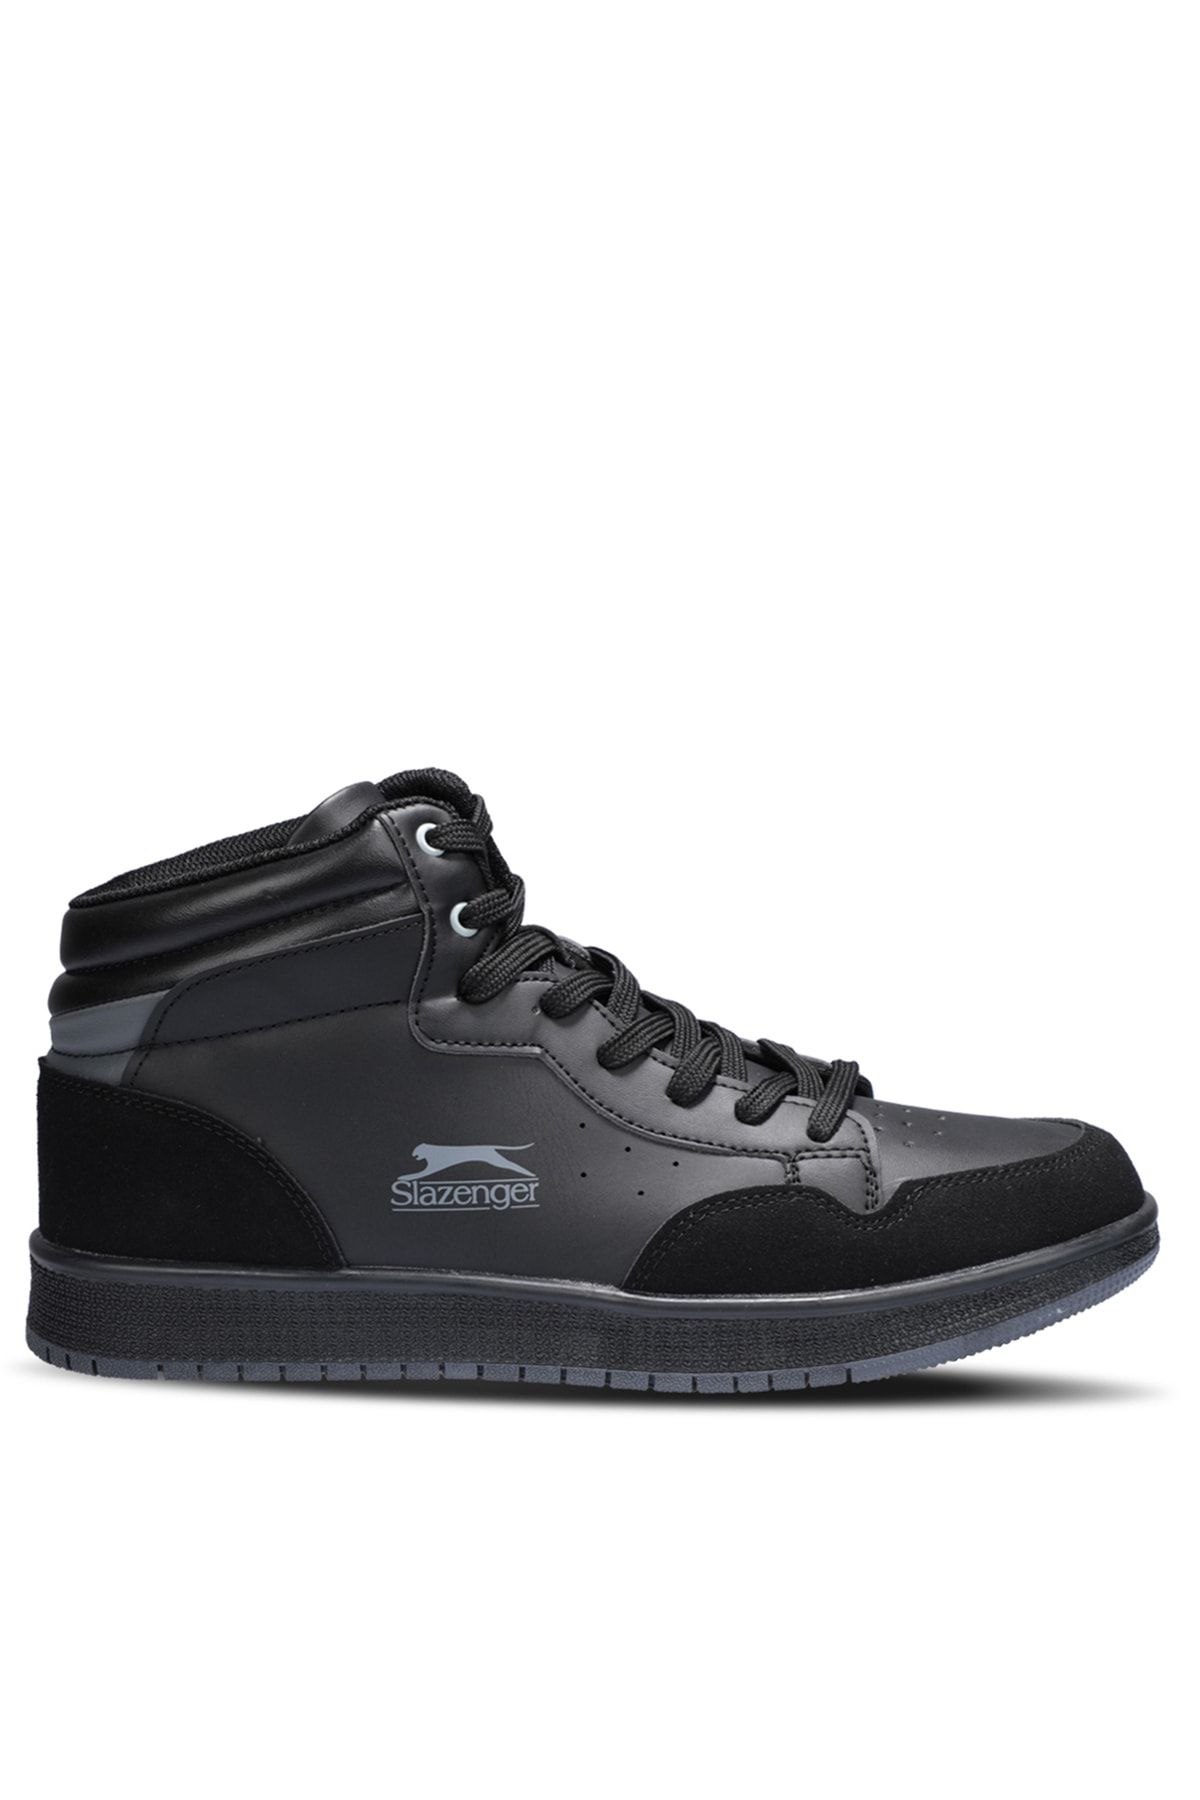 Slazenger Pace Sneaker Erkek Ayakkabı Siyah / Siyah